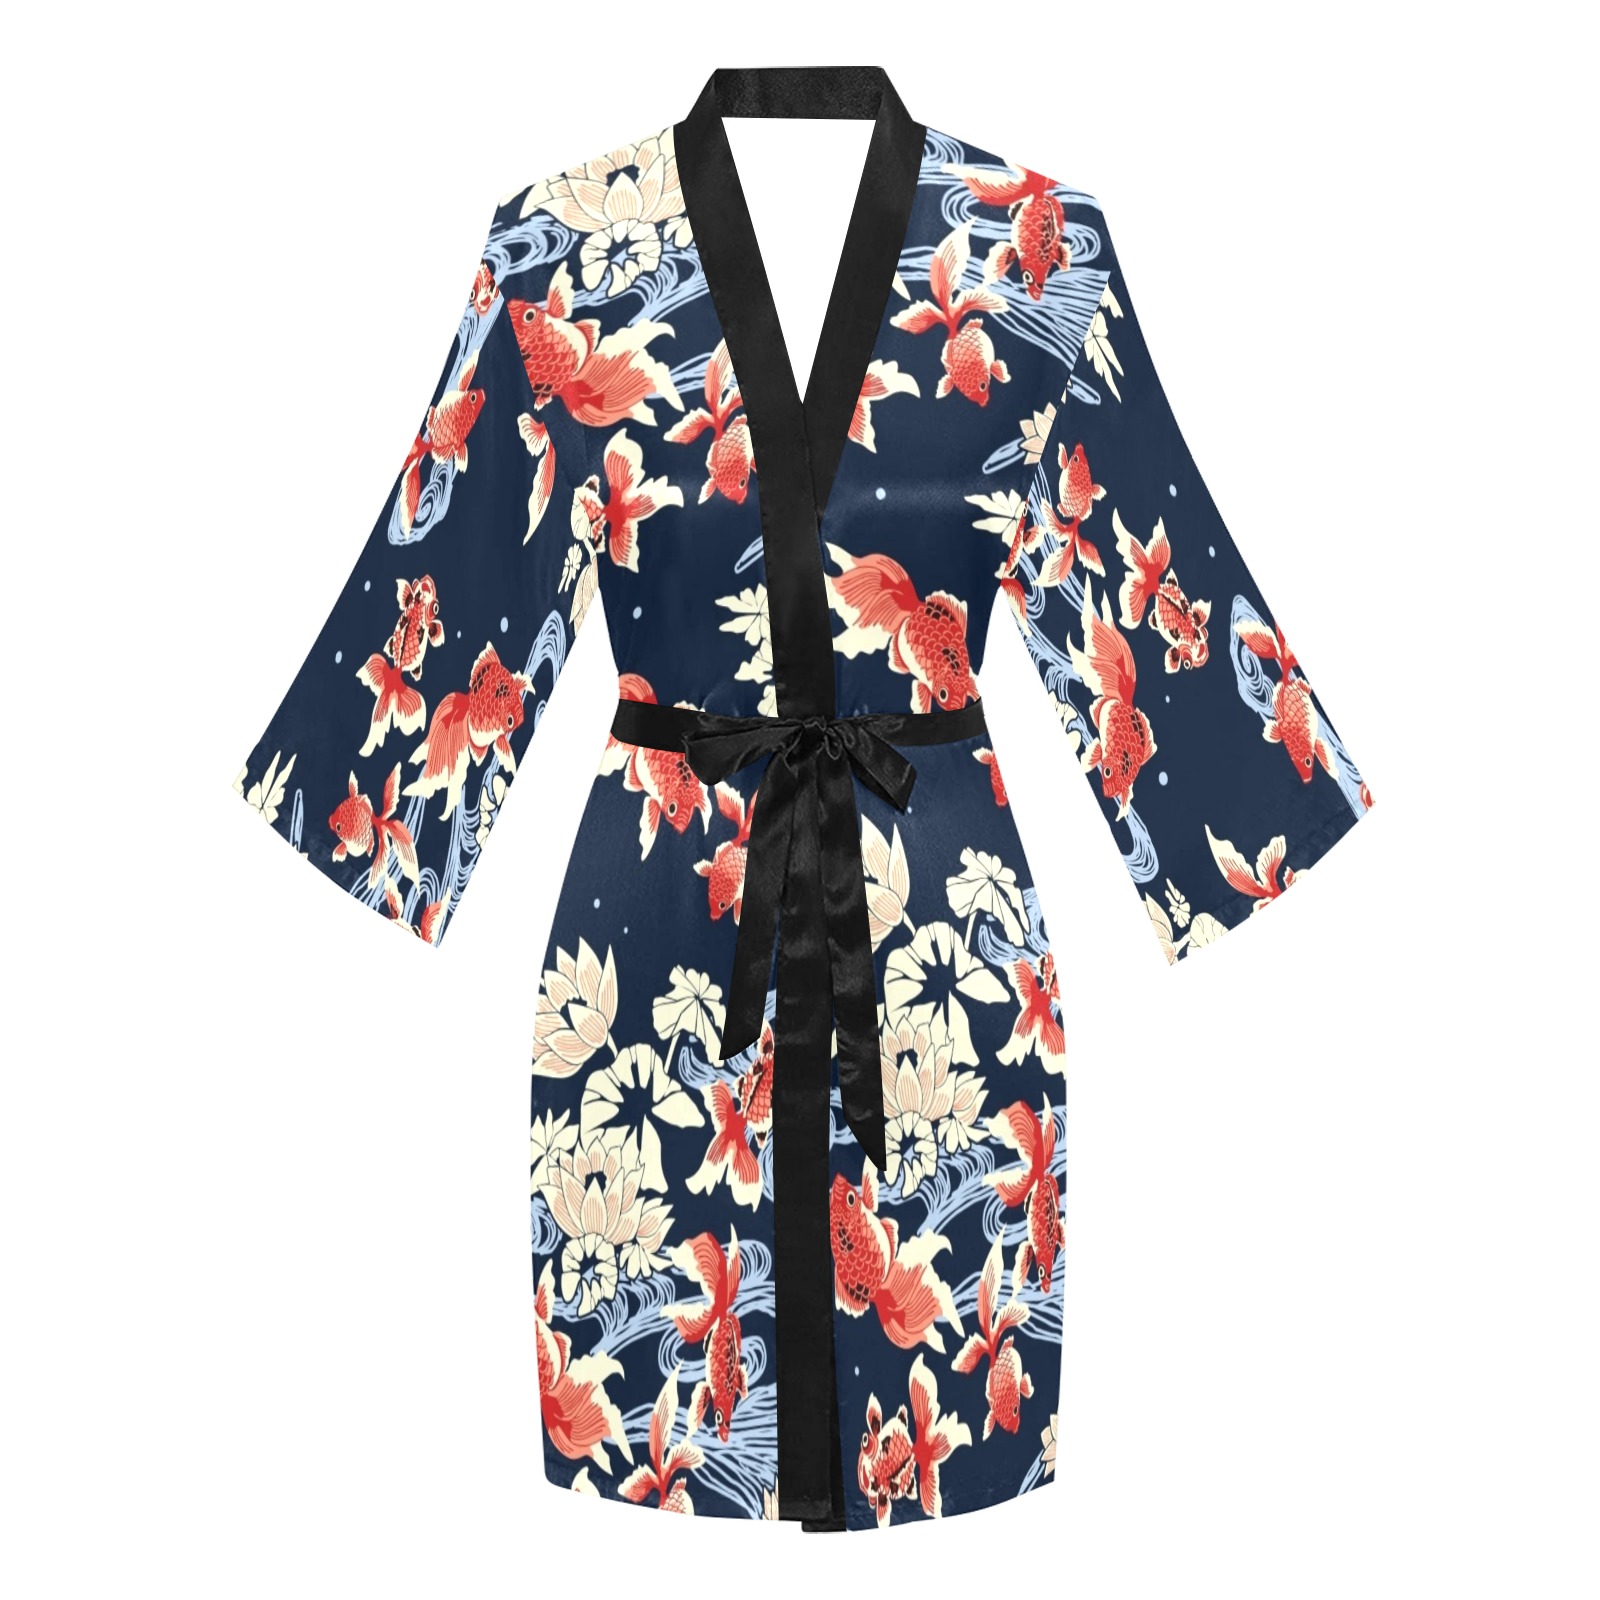 KOI FISH 002 Long Sleeve Kimono Robe